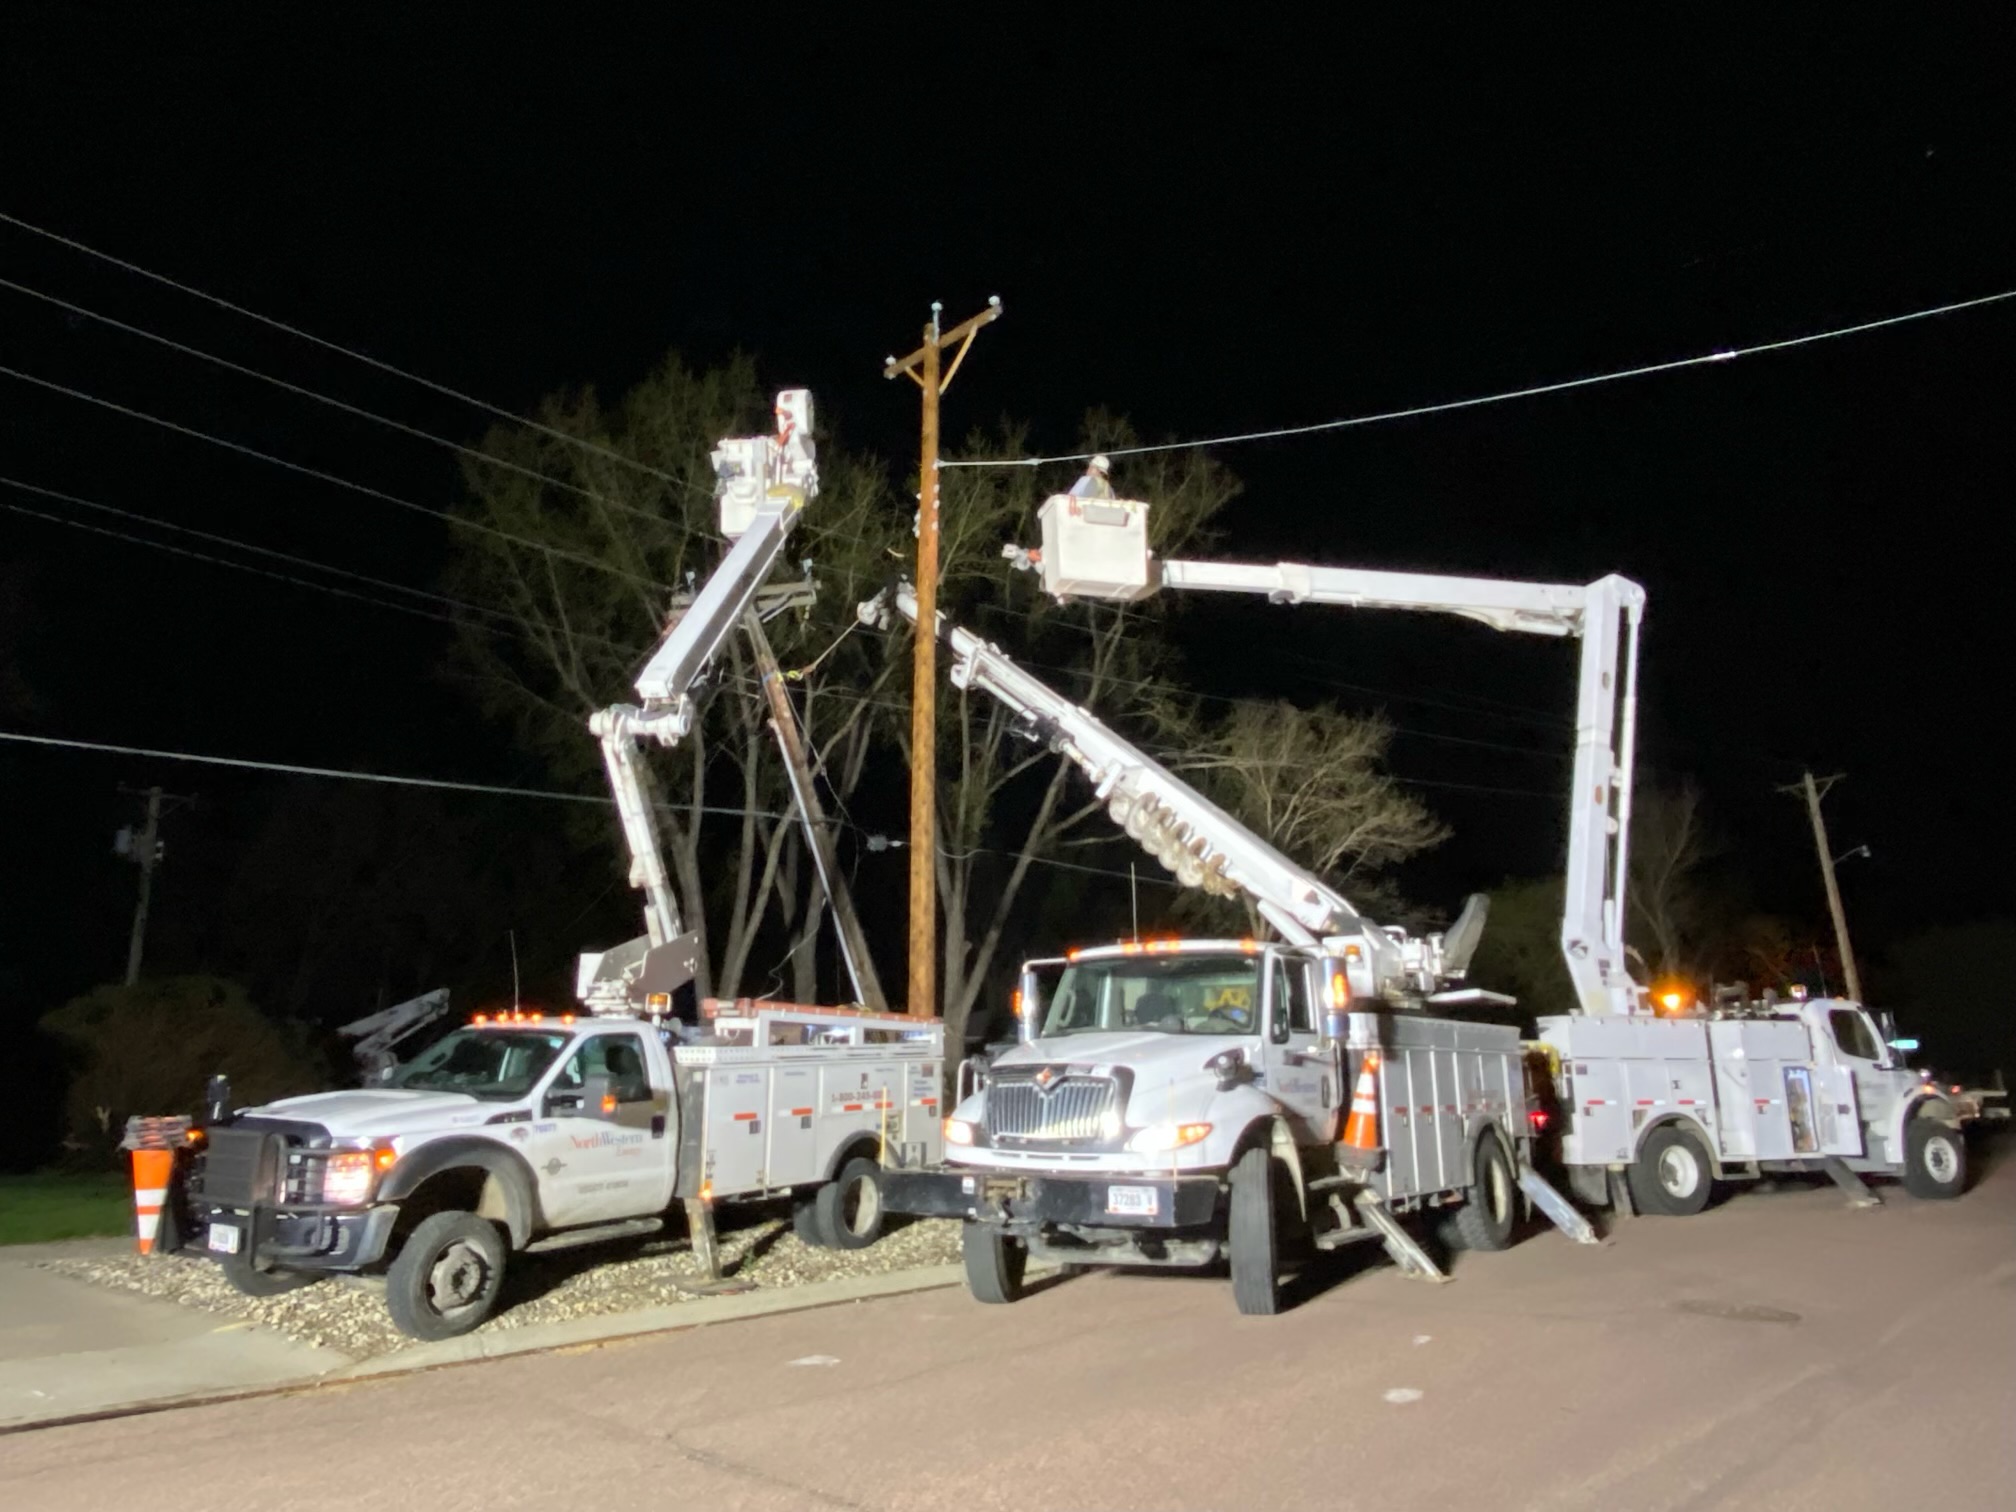 NorthWestern Energy crew servicing power lines at night